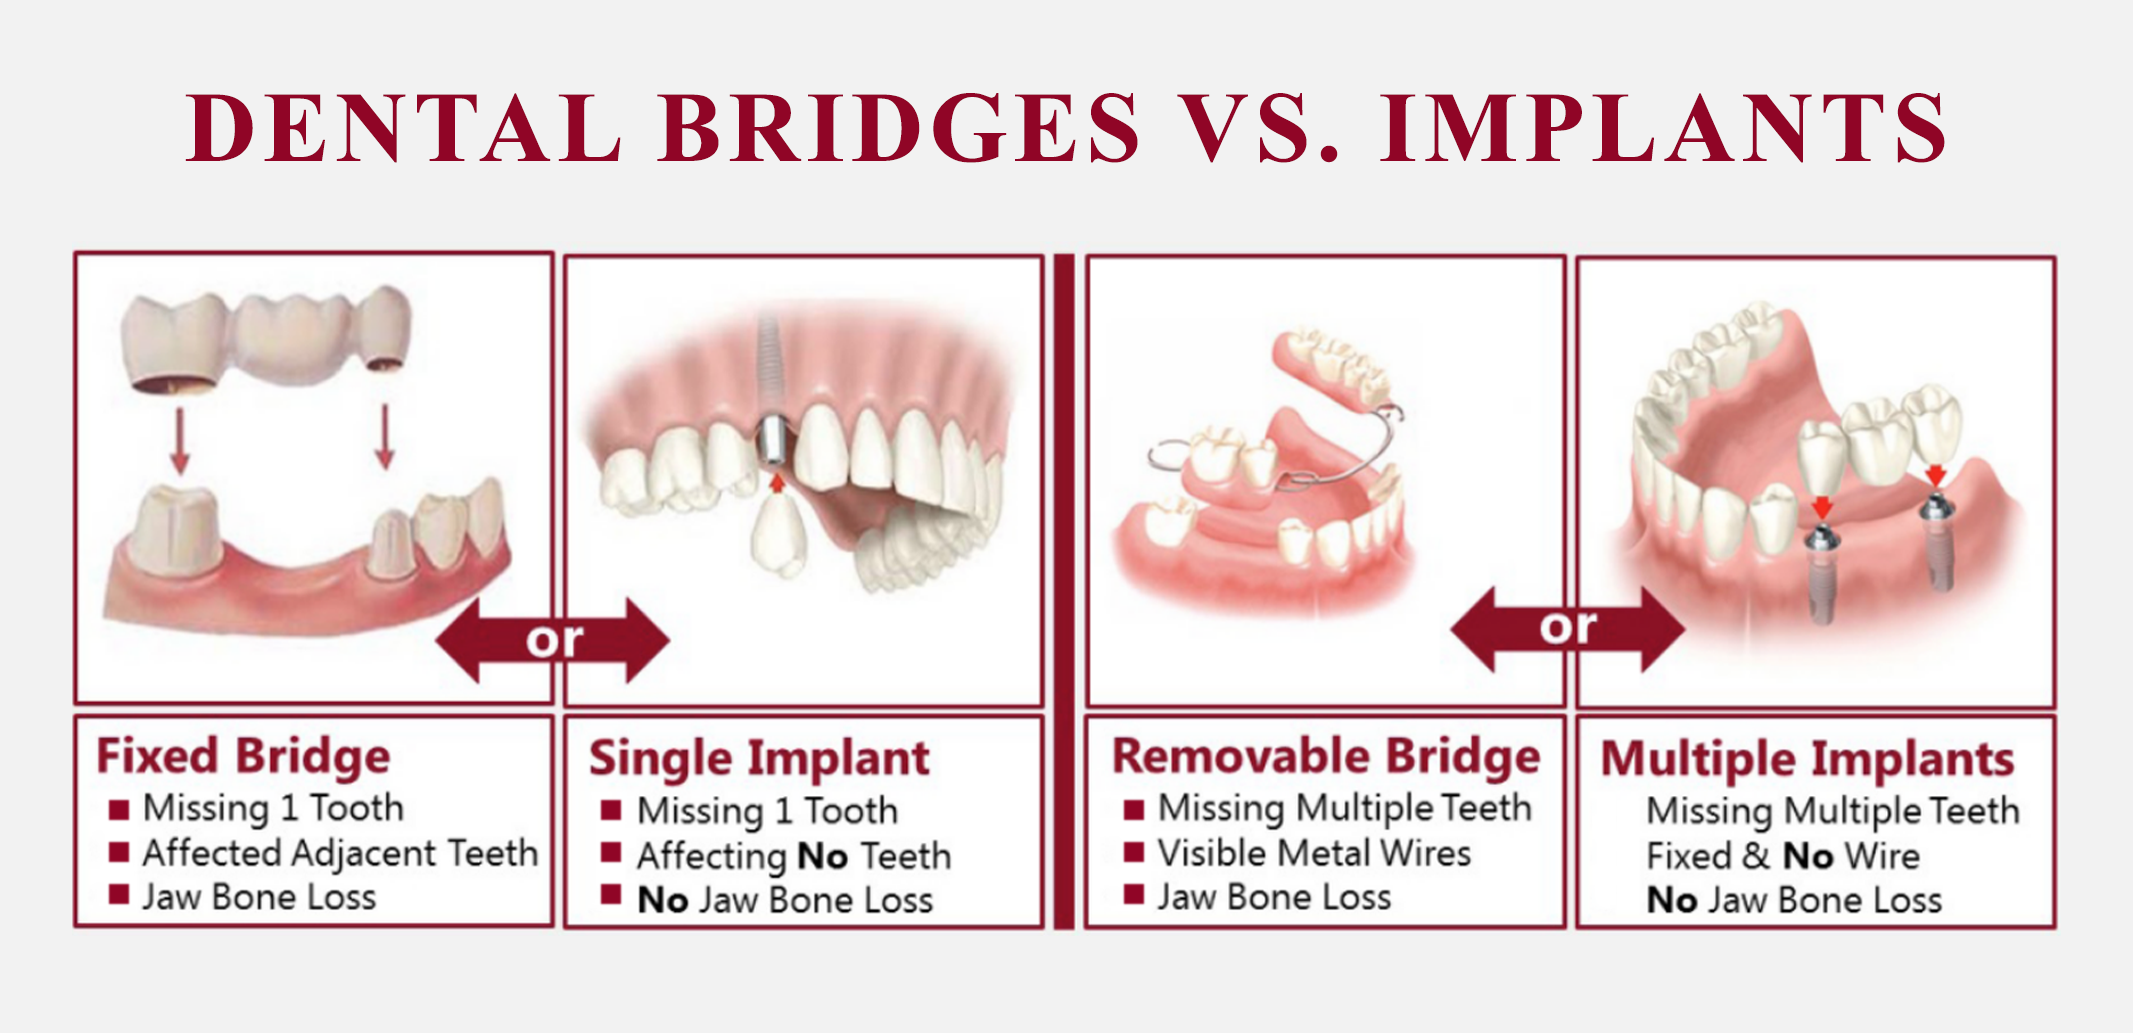 Dental Briges Vs. Implants